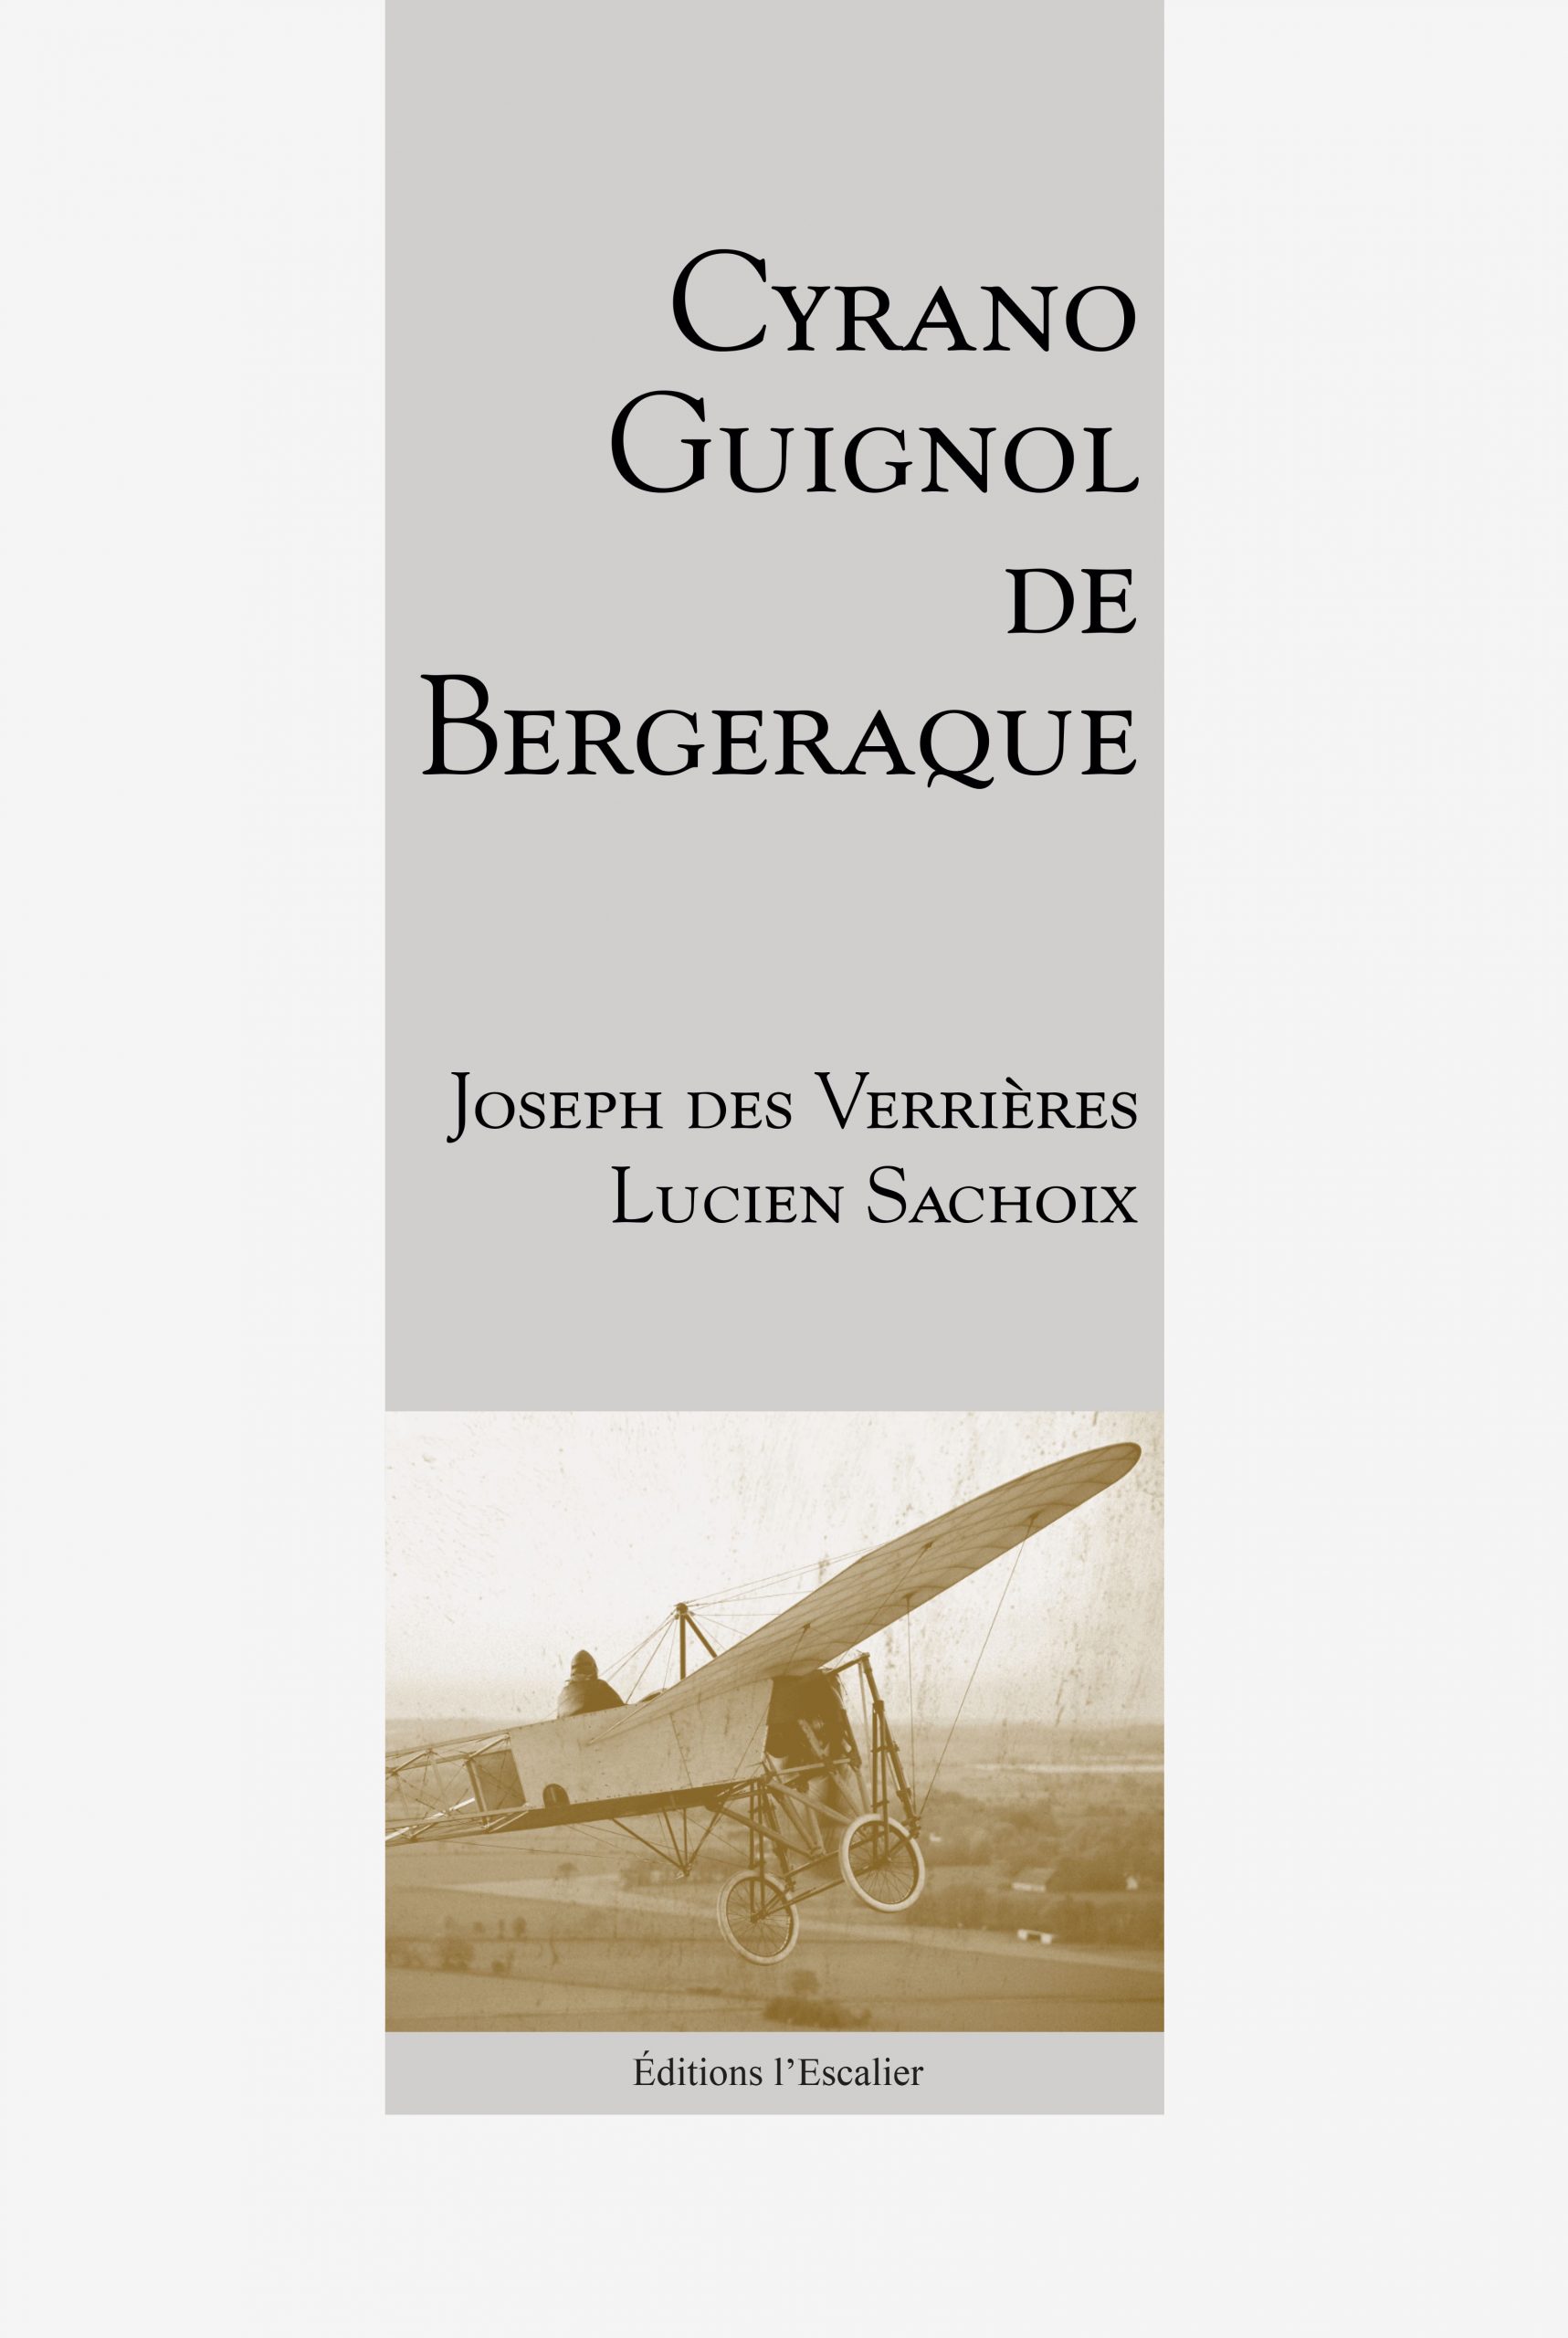 Cyrano-Guignol de Bergeraque - Joseph des Verrières, Lucien Sachoix